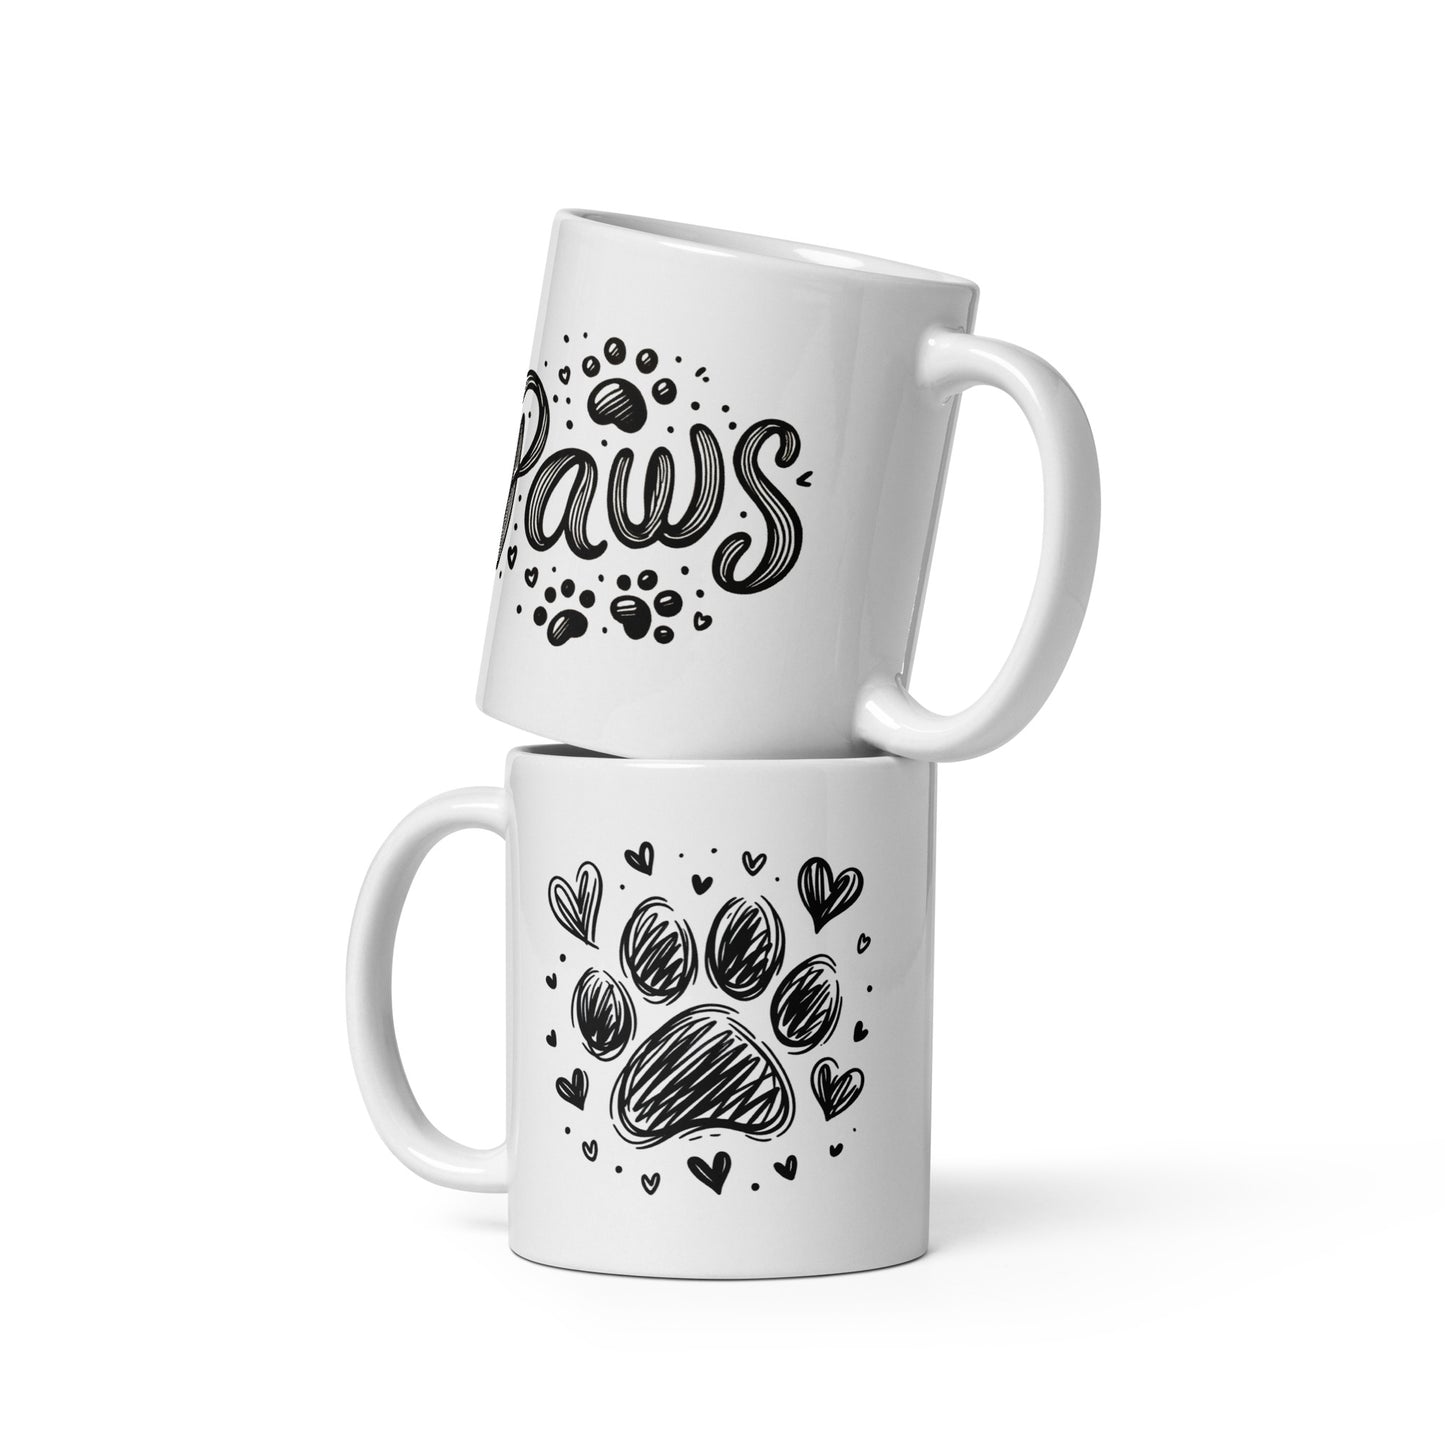 Paws! White glossy mug